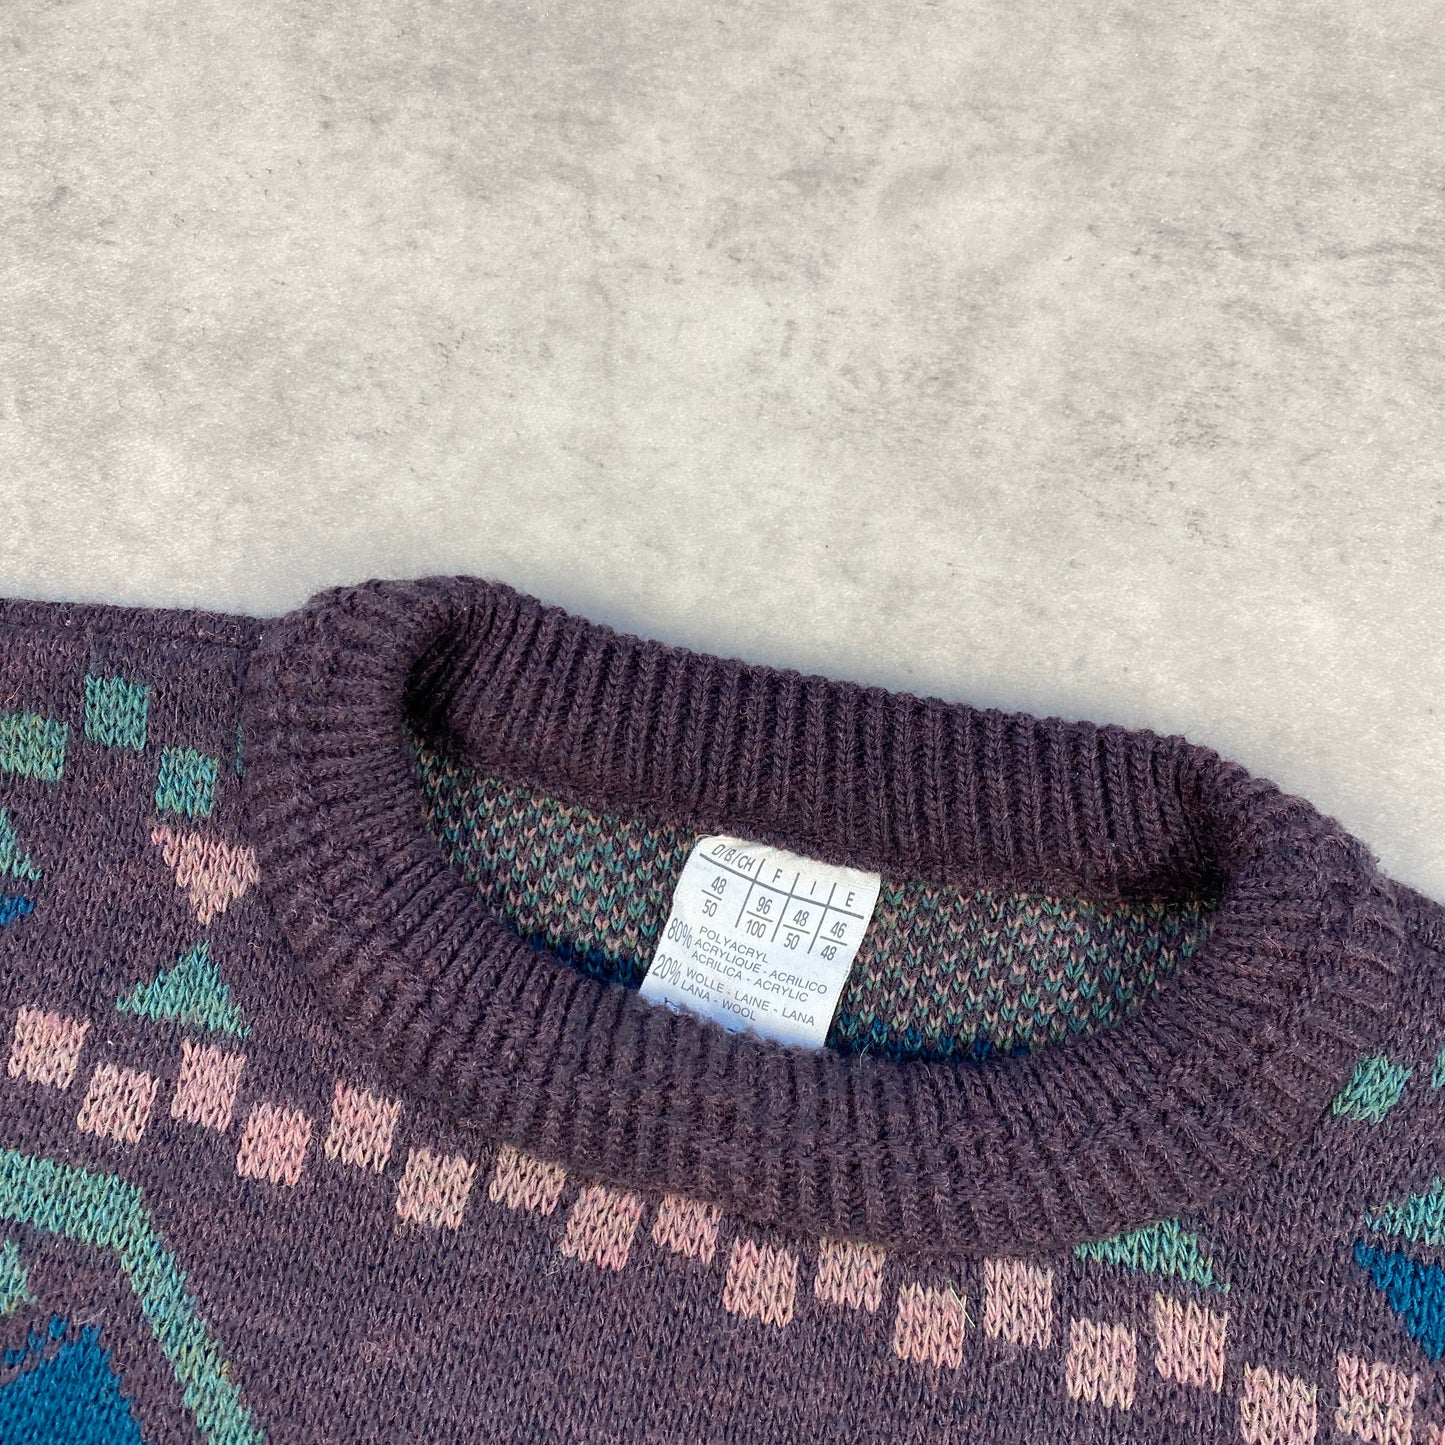 VTG knit heavyweight sweater (L)